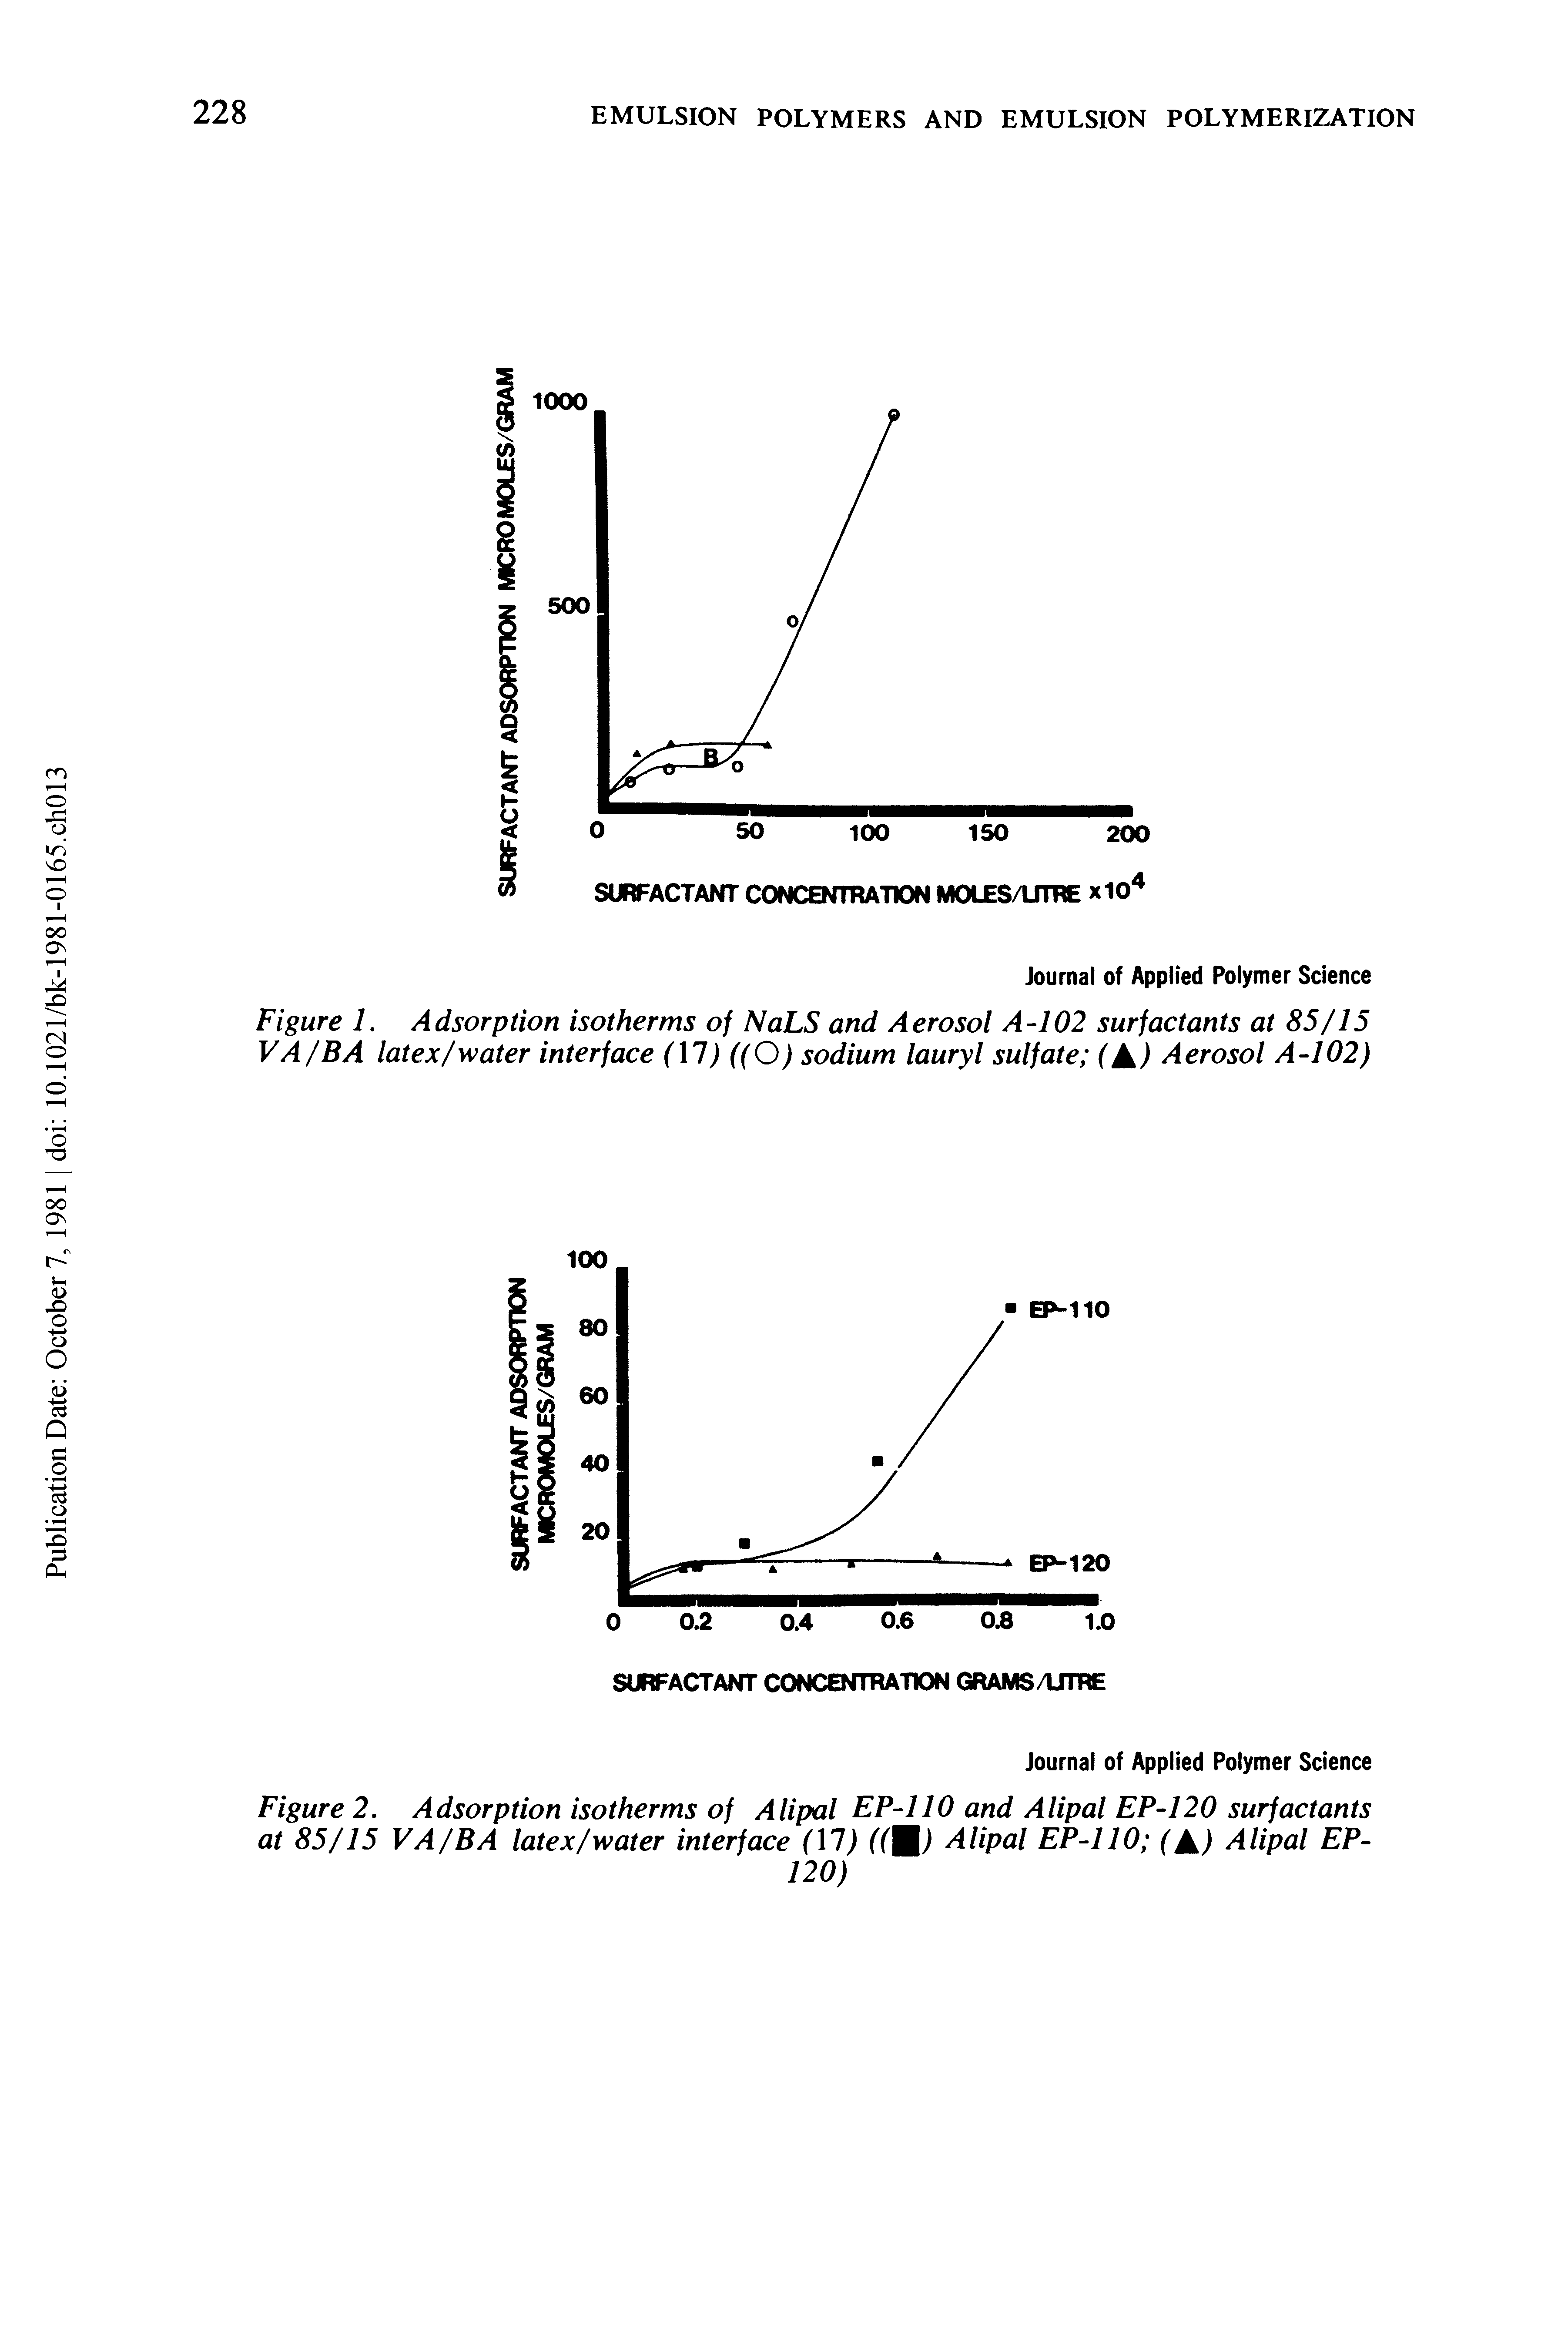 Figure 1. Adsorption isotherms of NaLS and Aerosol A-102 surfactants at 85/15 VA /BA latex /water interface (17) ((O) sodium lauryl sulfate (A) Aerosol A-102)...